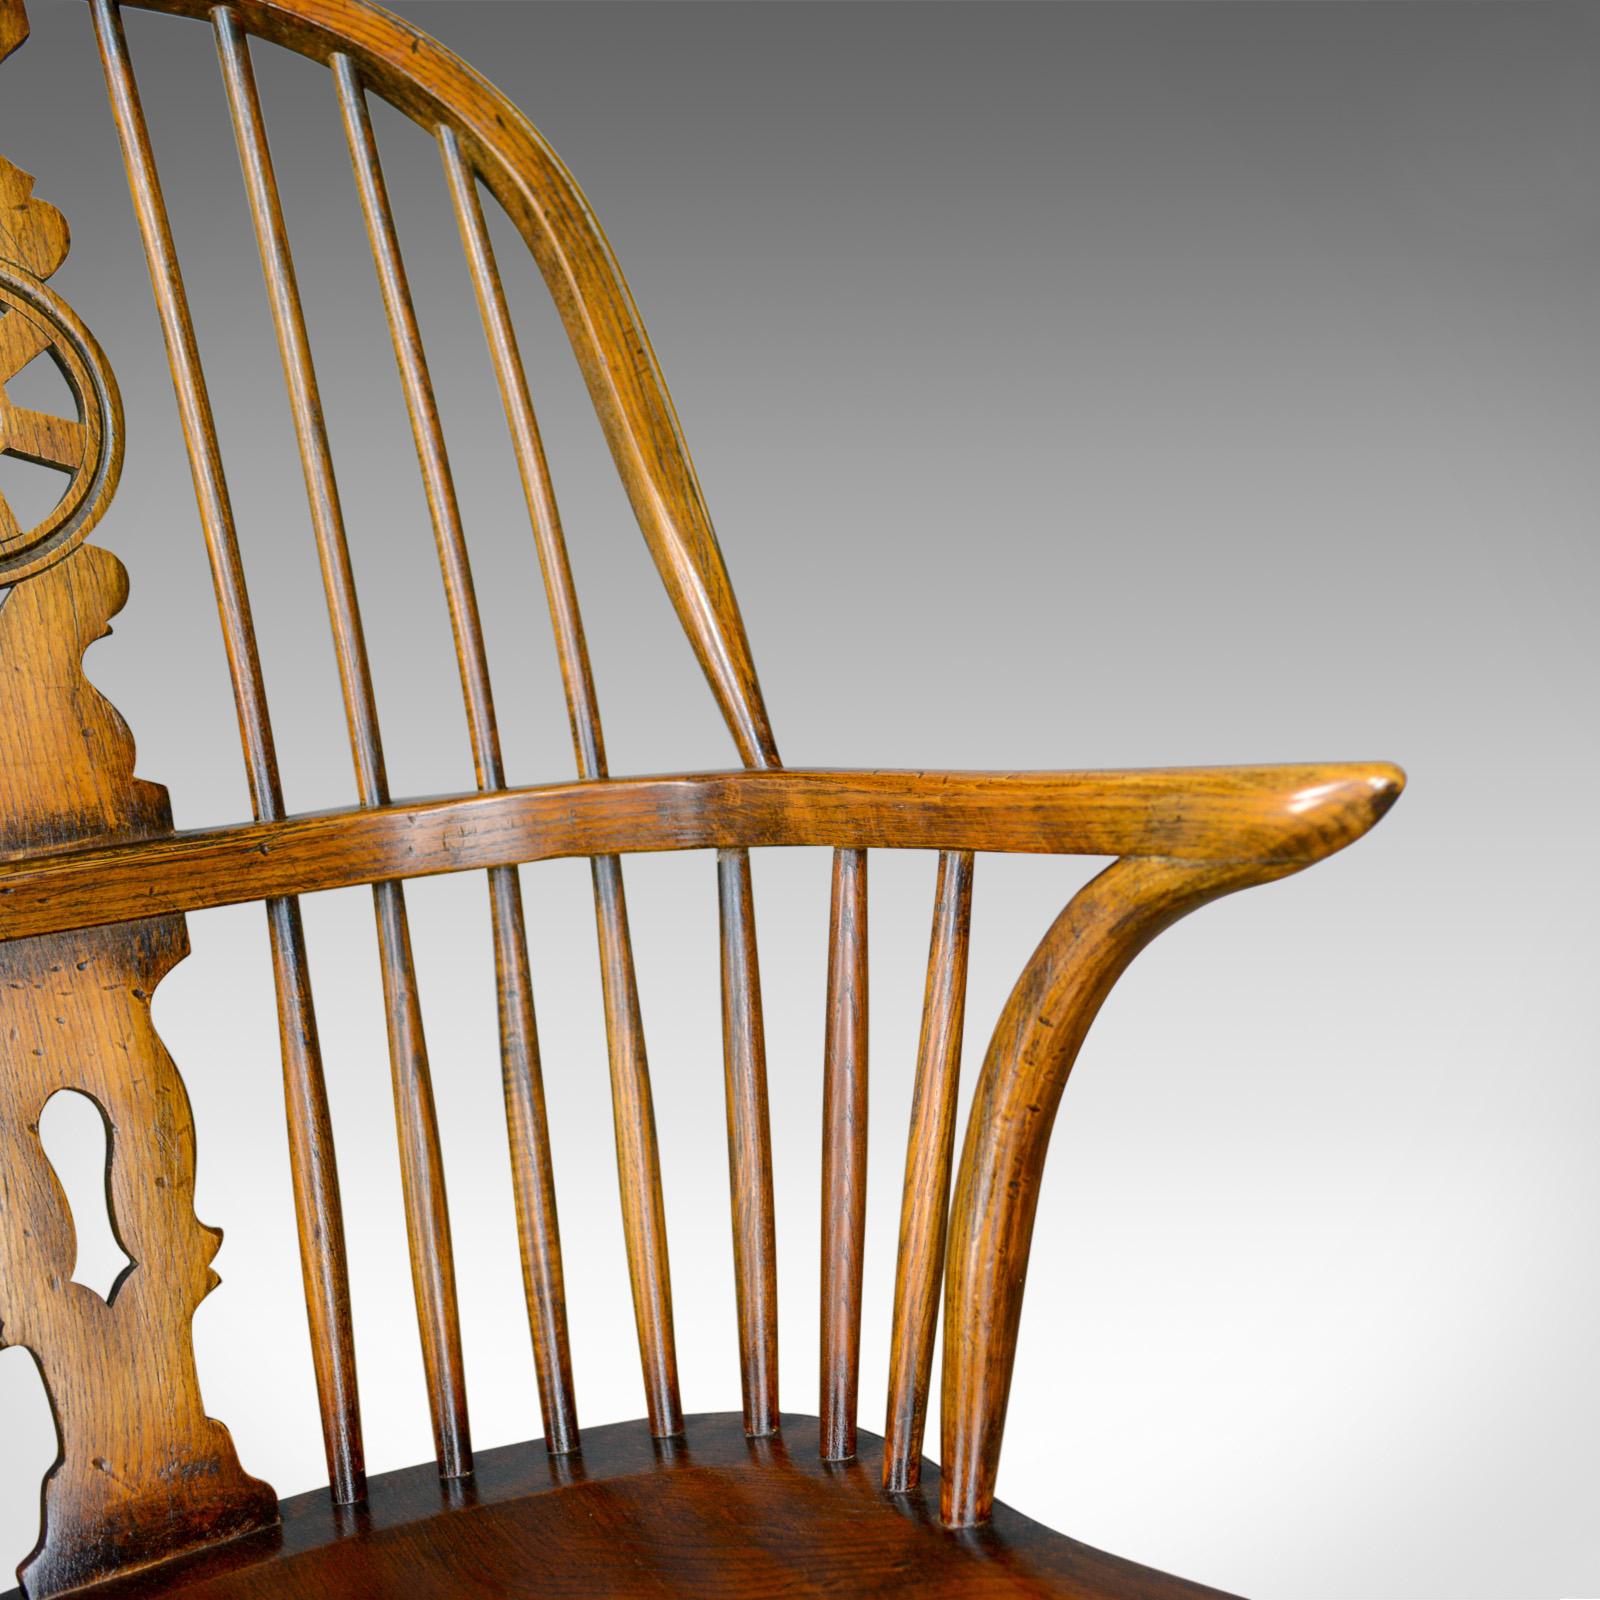 Elm Antique Rocking Chair, English, Edwardian, Windsor Stick Back, Elbow, circa 1910